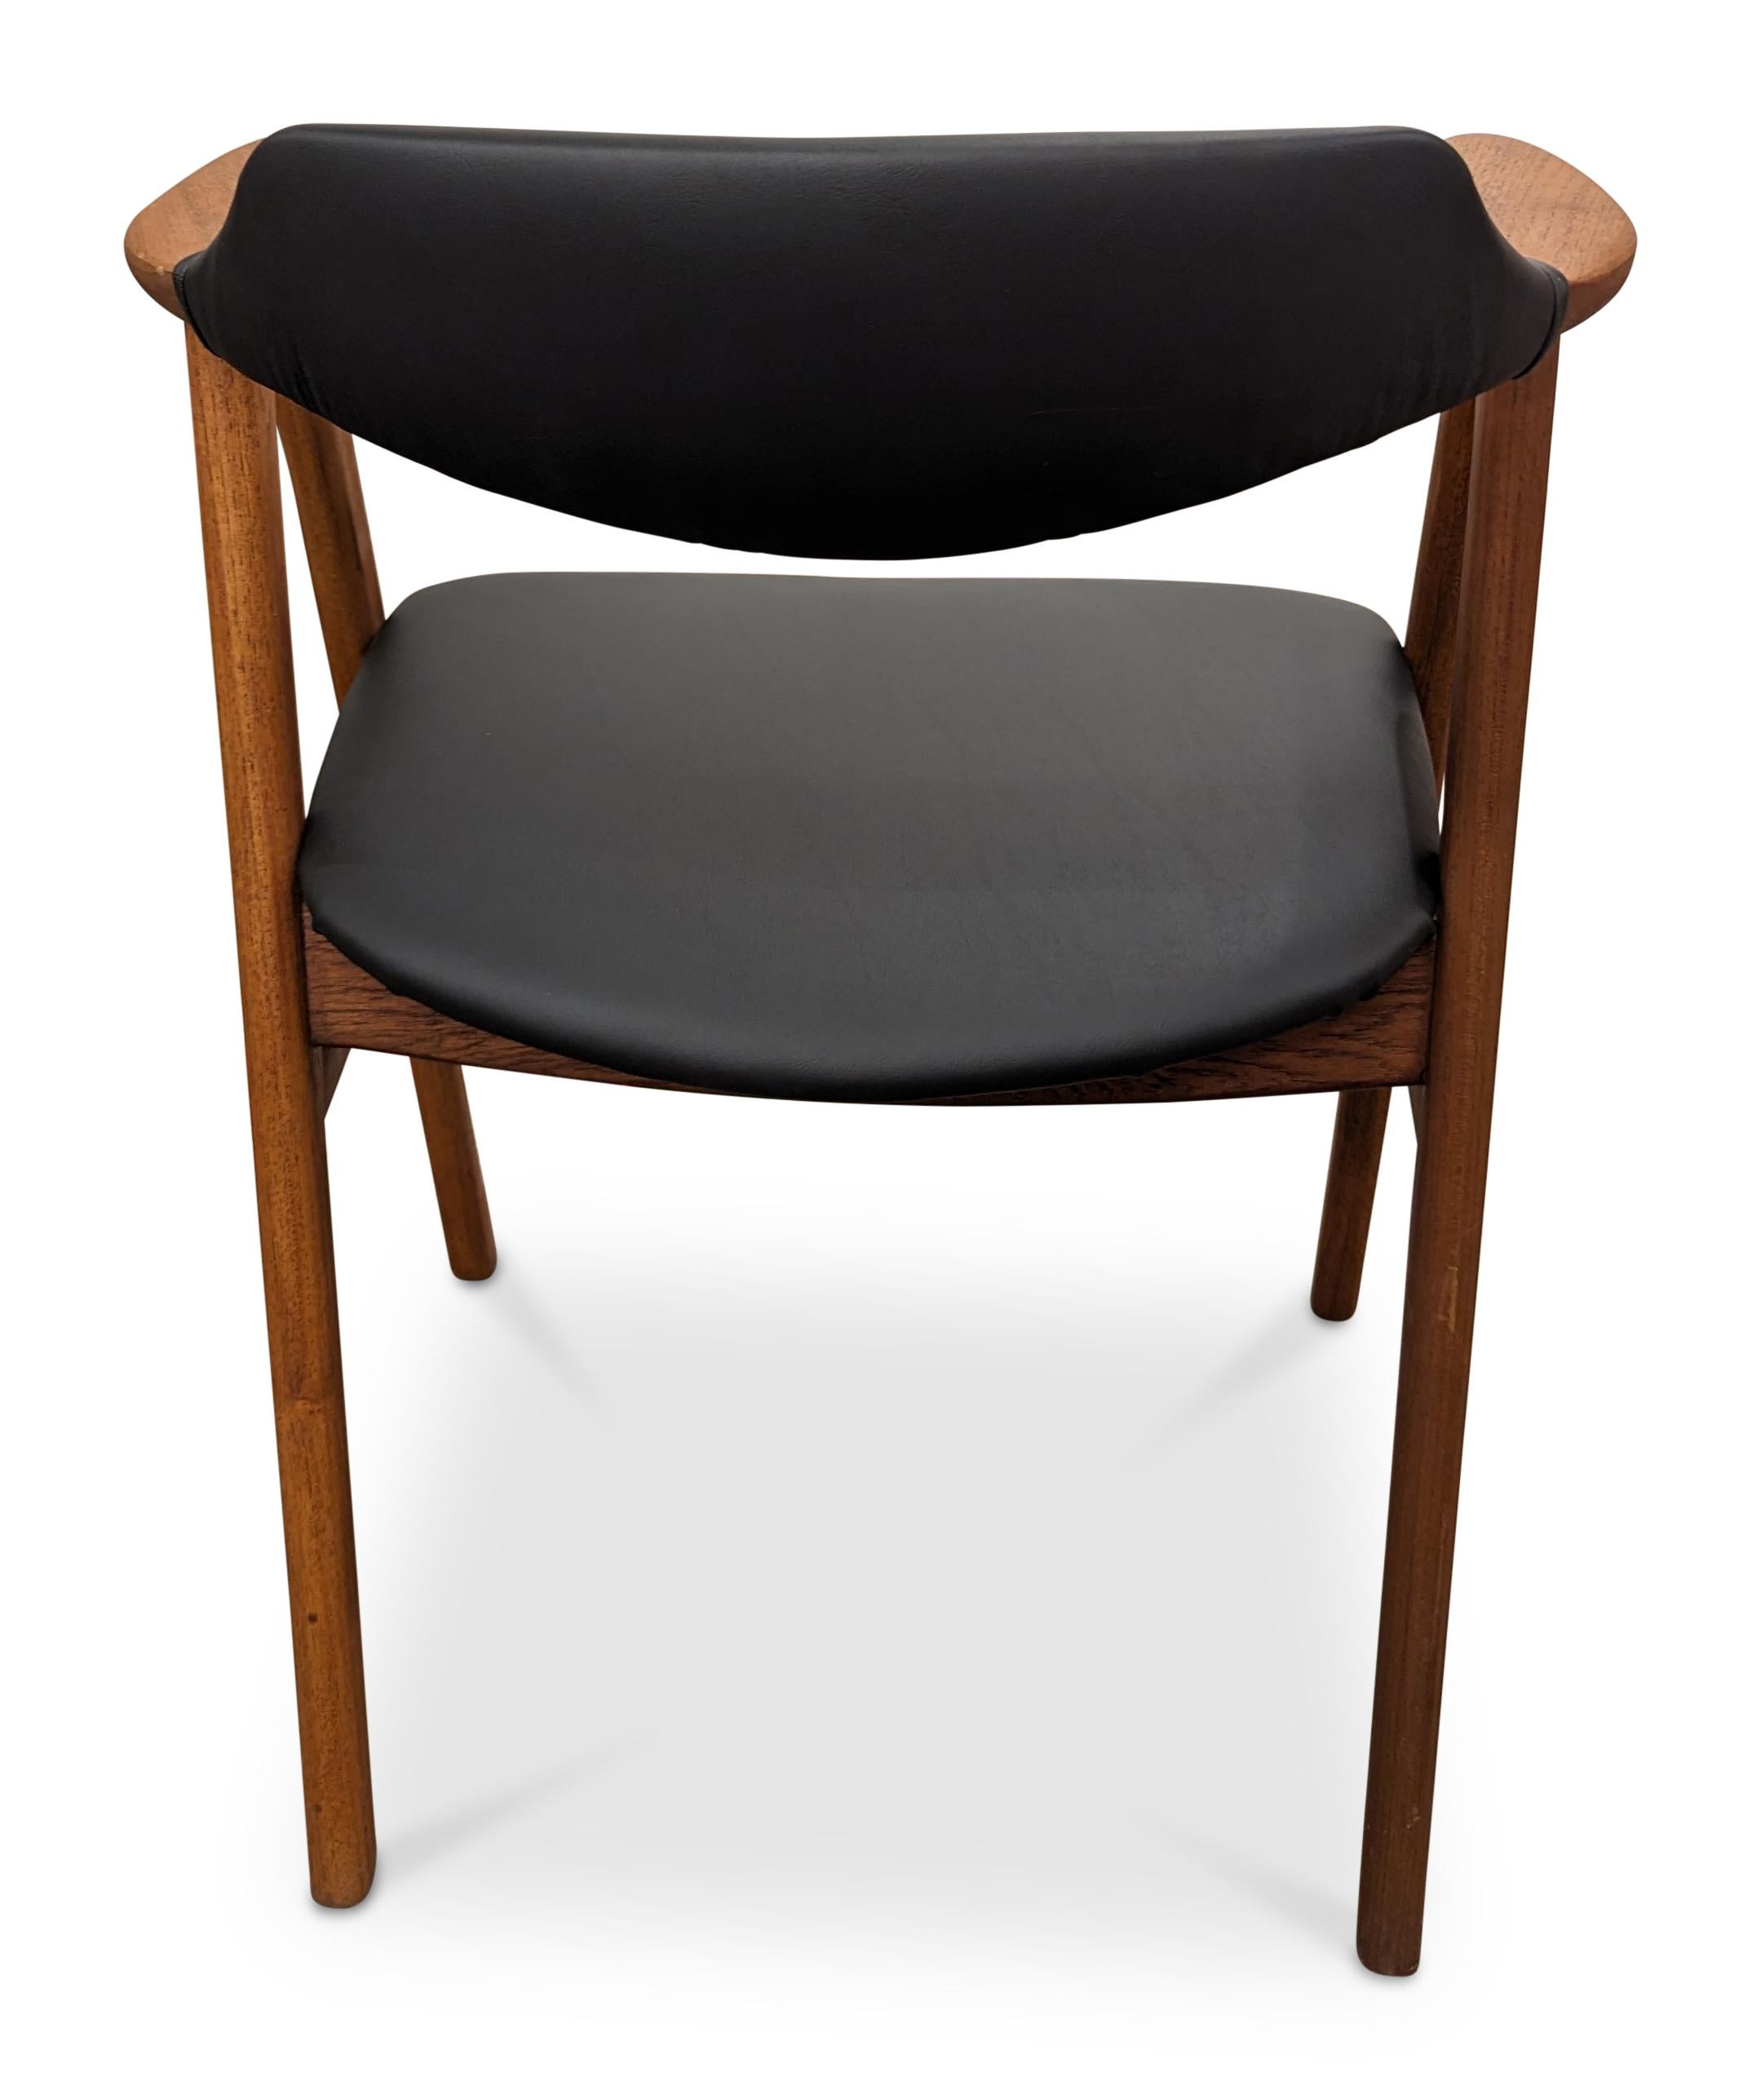 Teak  Vintage Danish Mid Century Erik Kirkegaard Arm Chair - 022430 For Sale